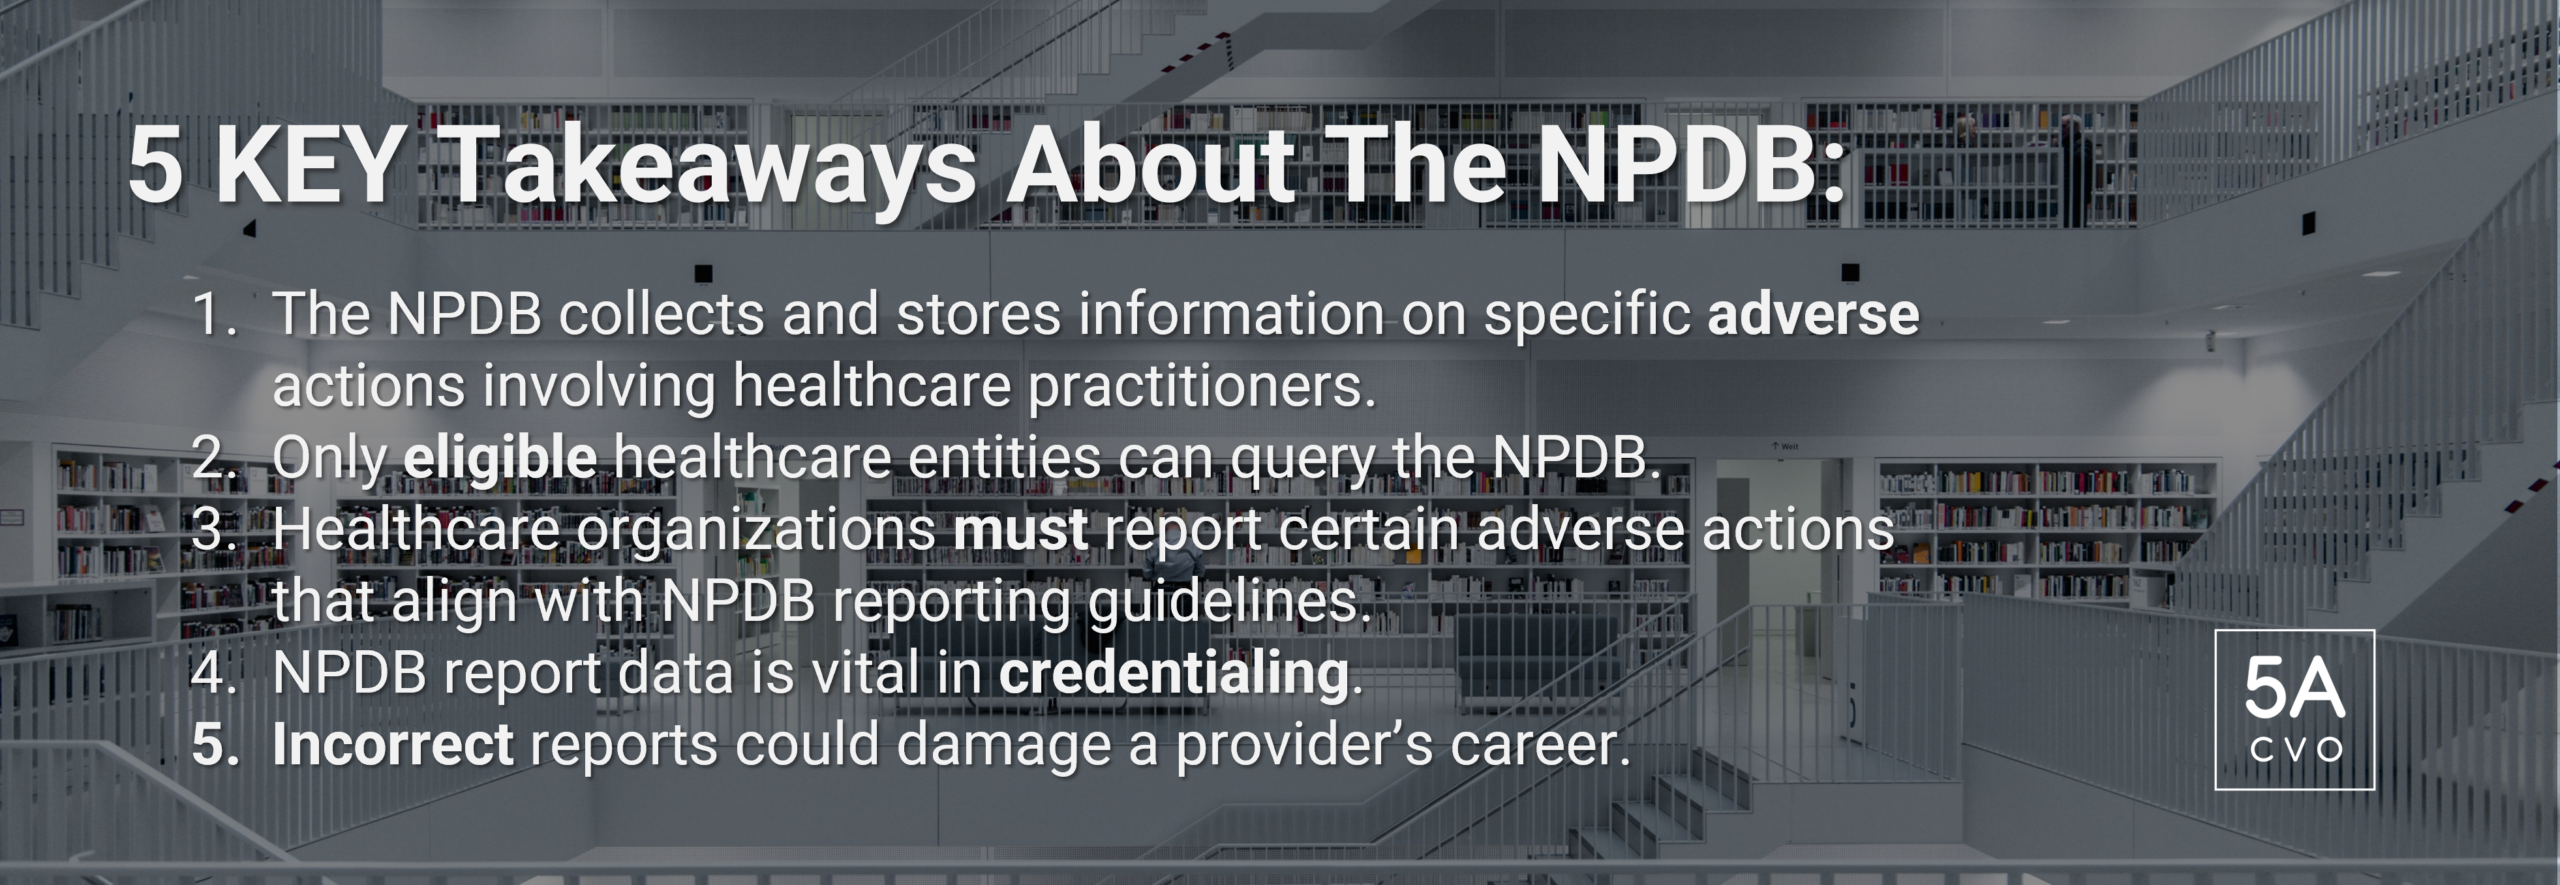 5 Key Takeaways About The NPDB